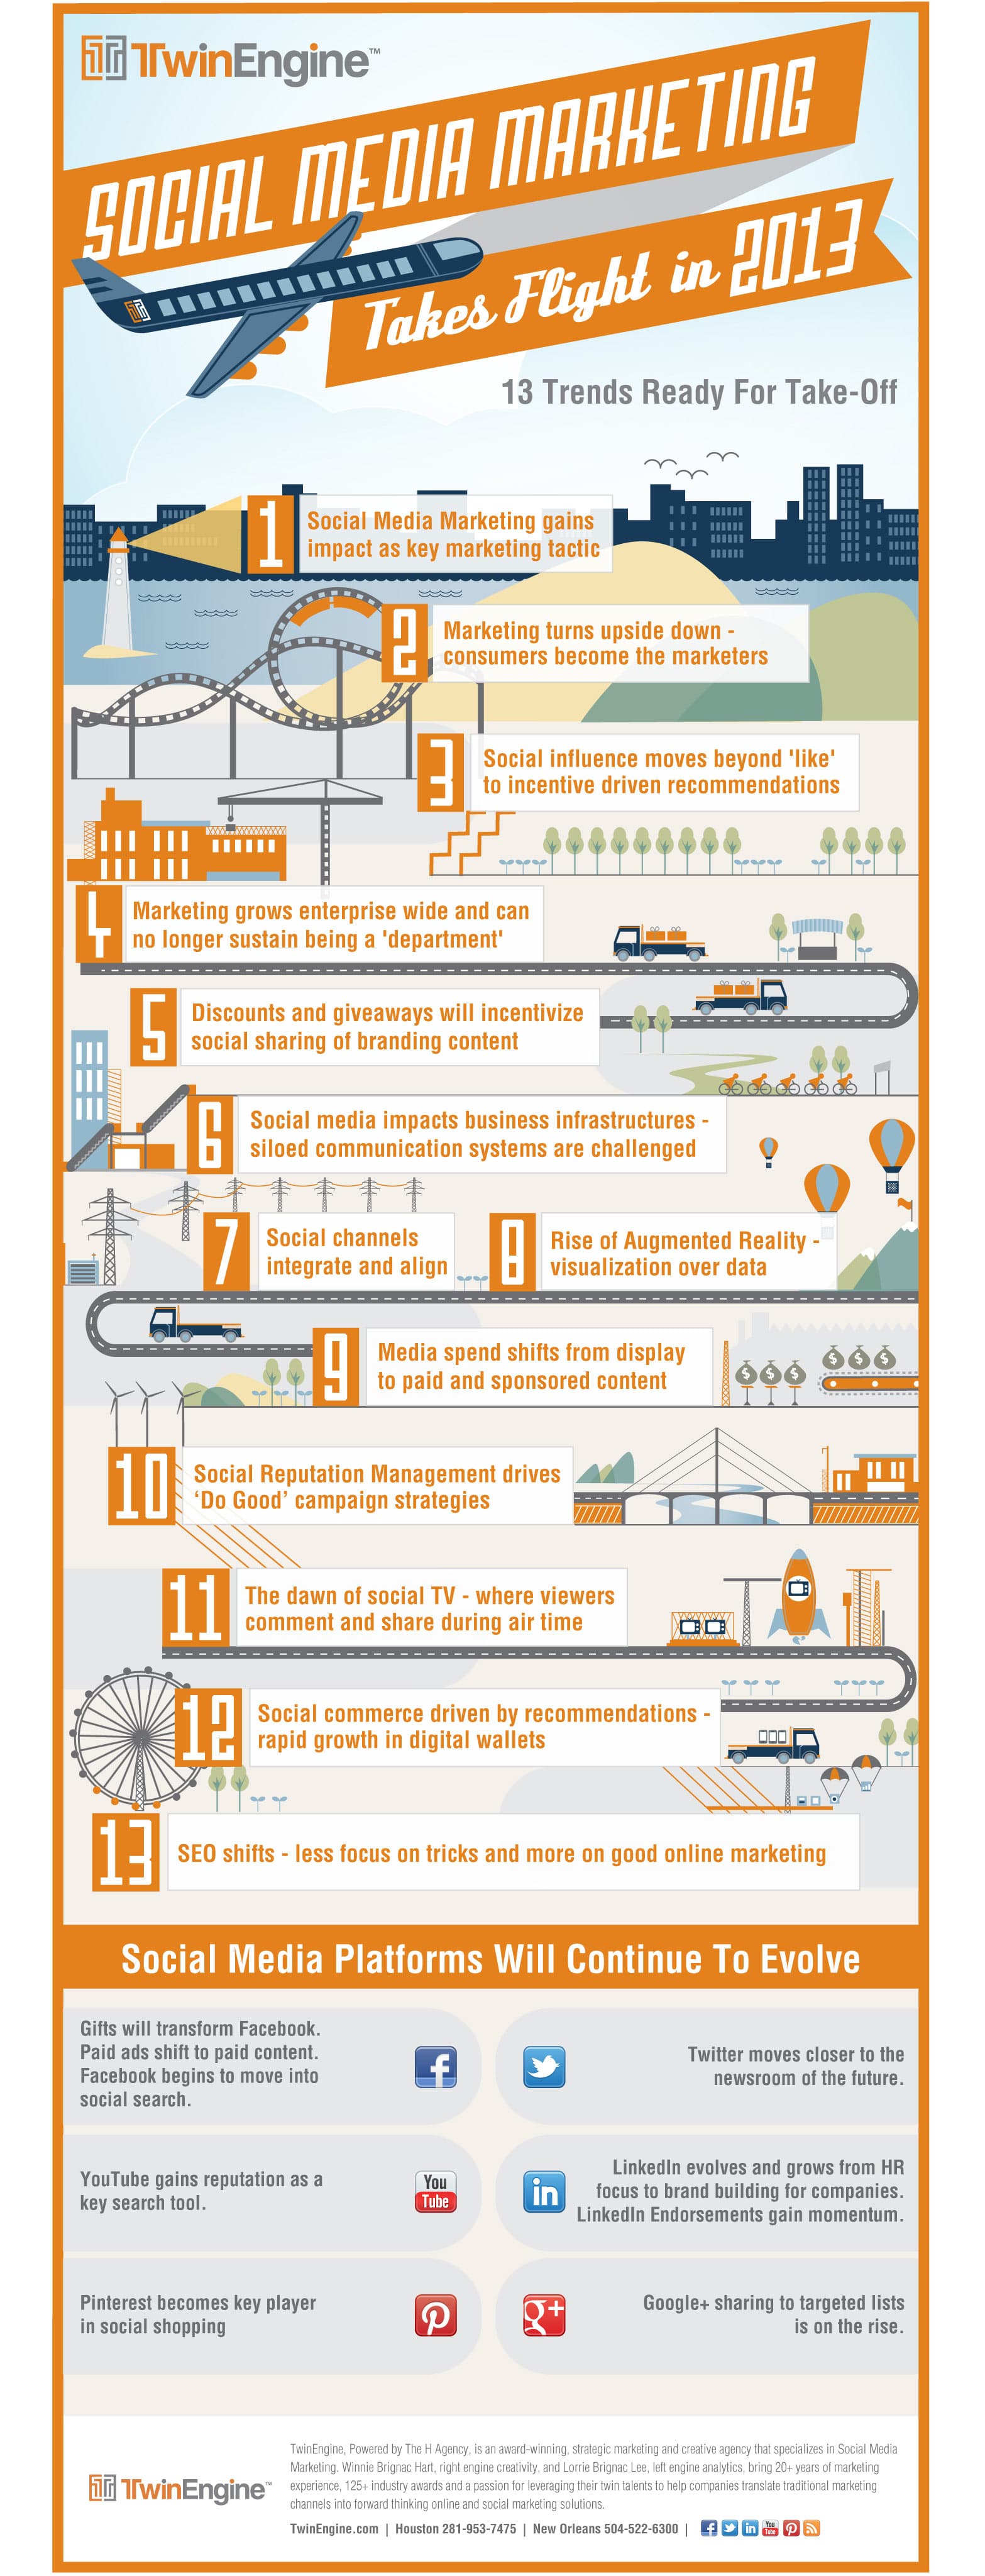 internet-marketing-trends-2013-infographic